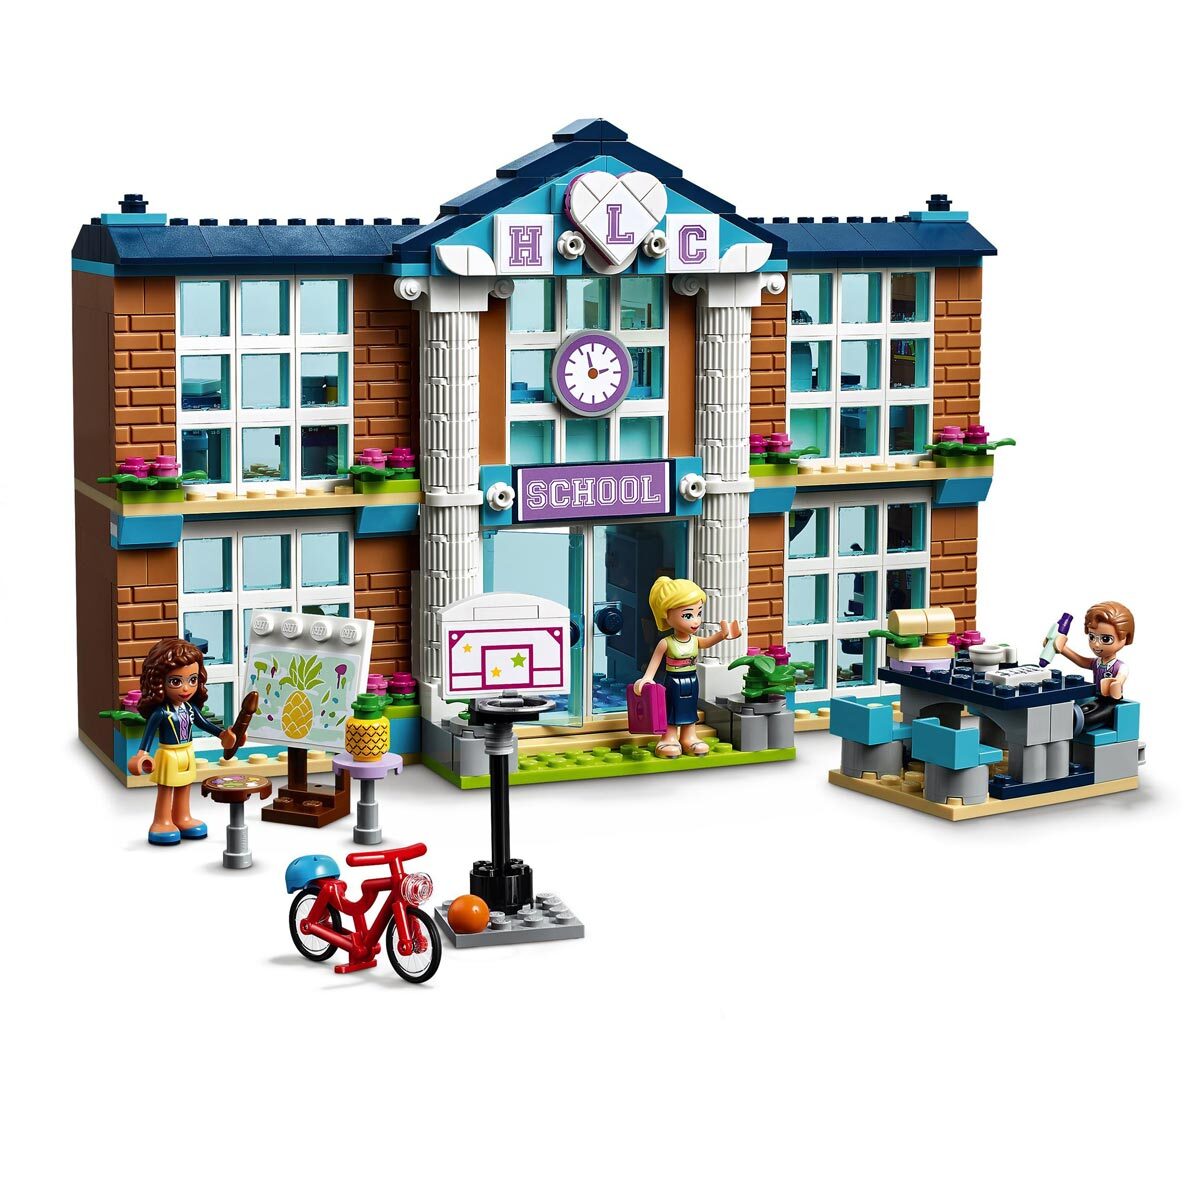 Buy LEGO Friends Heartlake City School Product Image at costco.co.uk